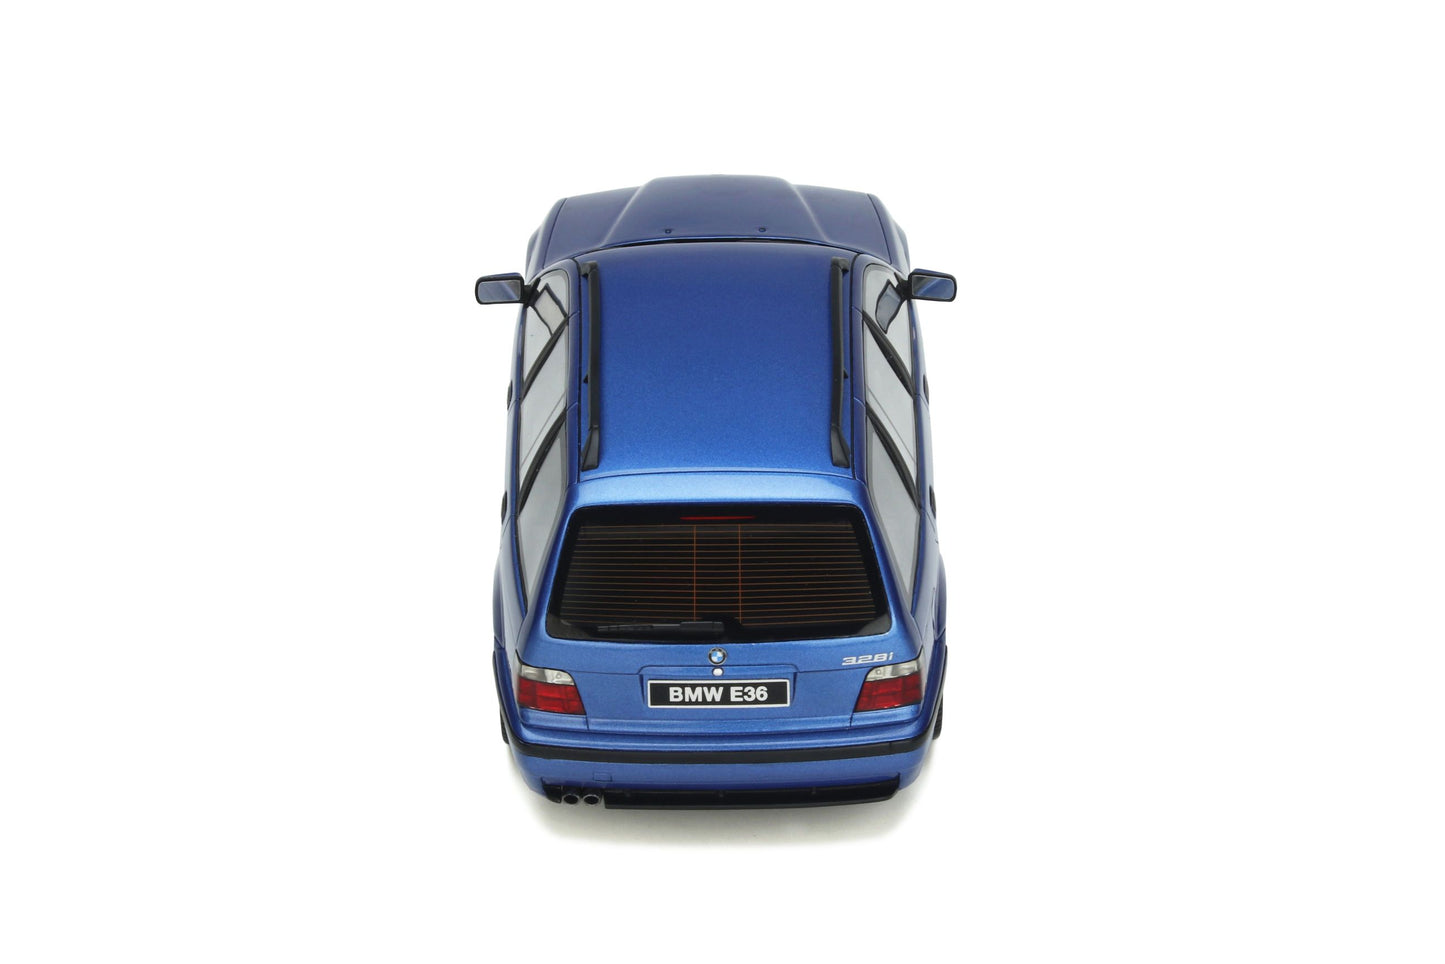 OttOmobile - BMW 328i (E36) Touring M Package (Estoril Blue) 1:18 Scale Model Car